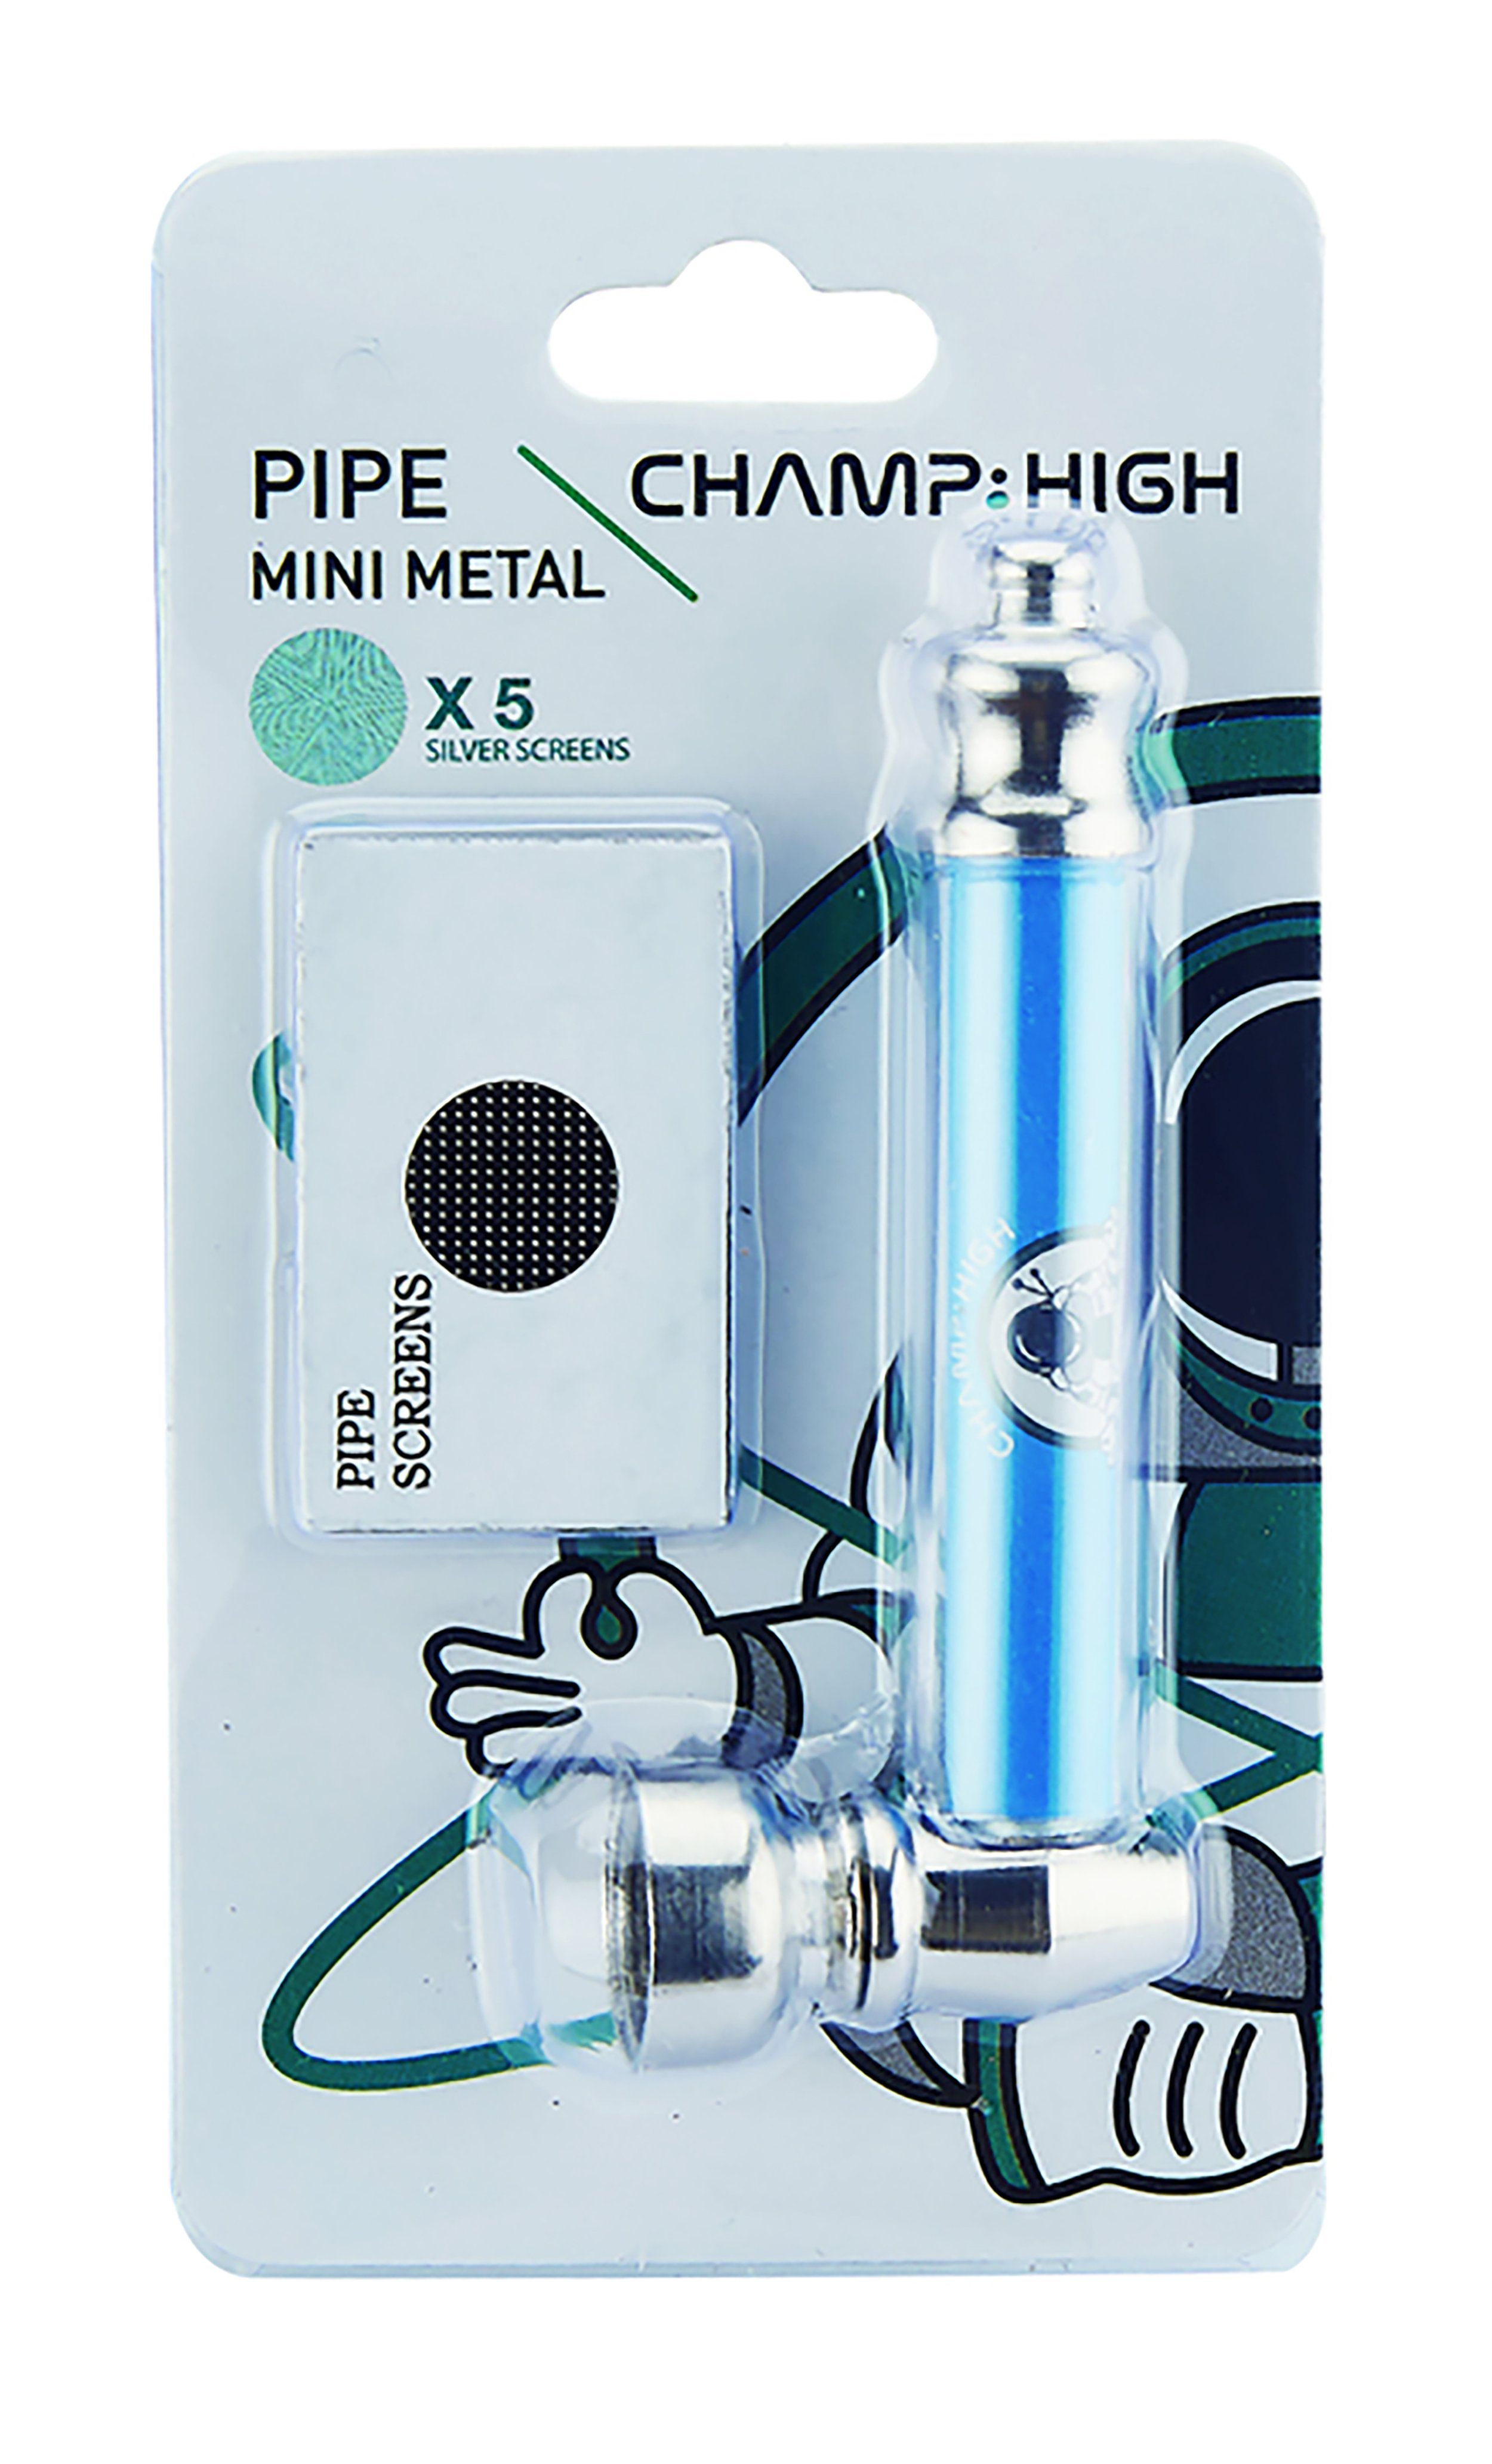 PFEIFE mit Pipe Tabak Handpfeife 54 CHAMP MINI HIGH Metall Tabakpfeife (Blau), Sieben 8,5cm 5 lang